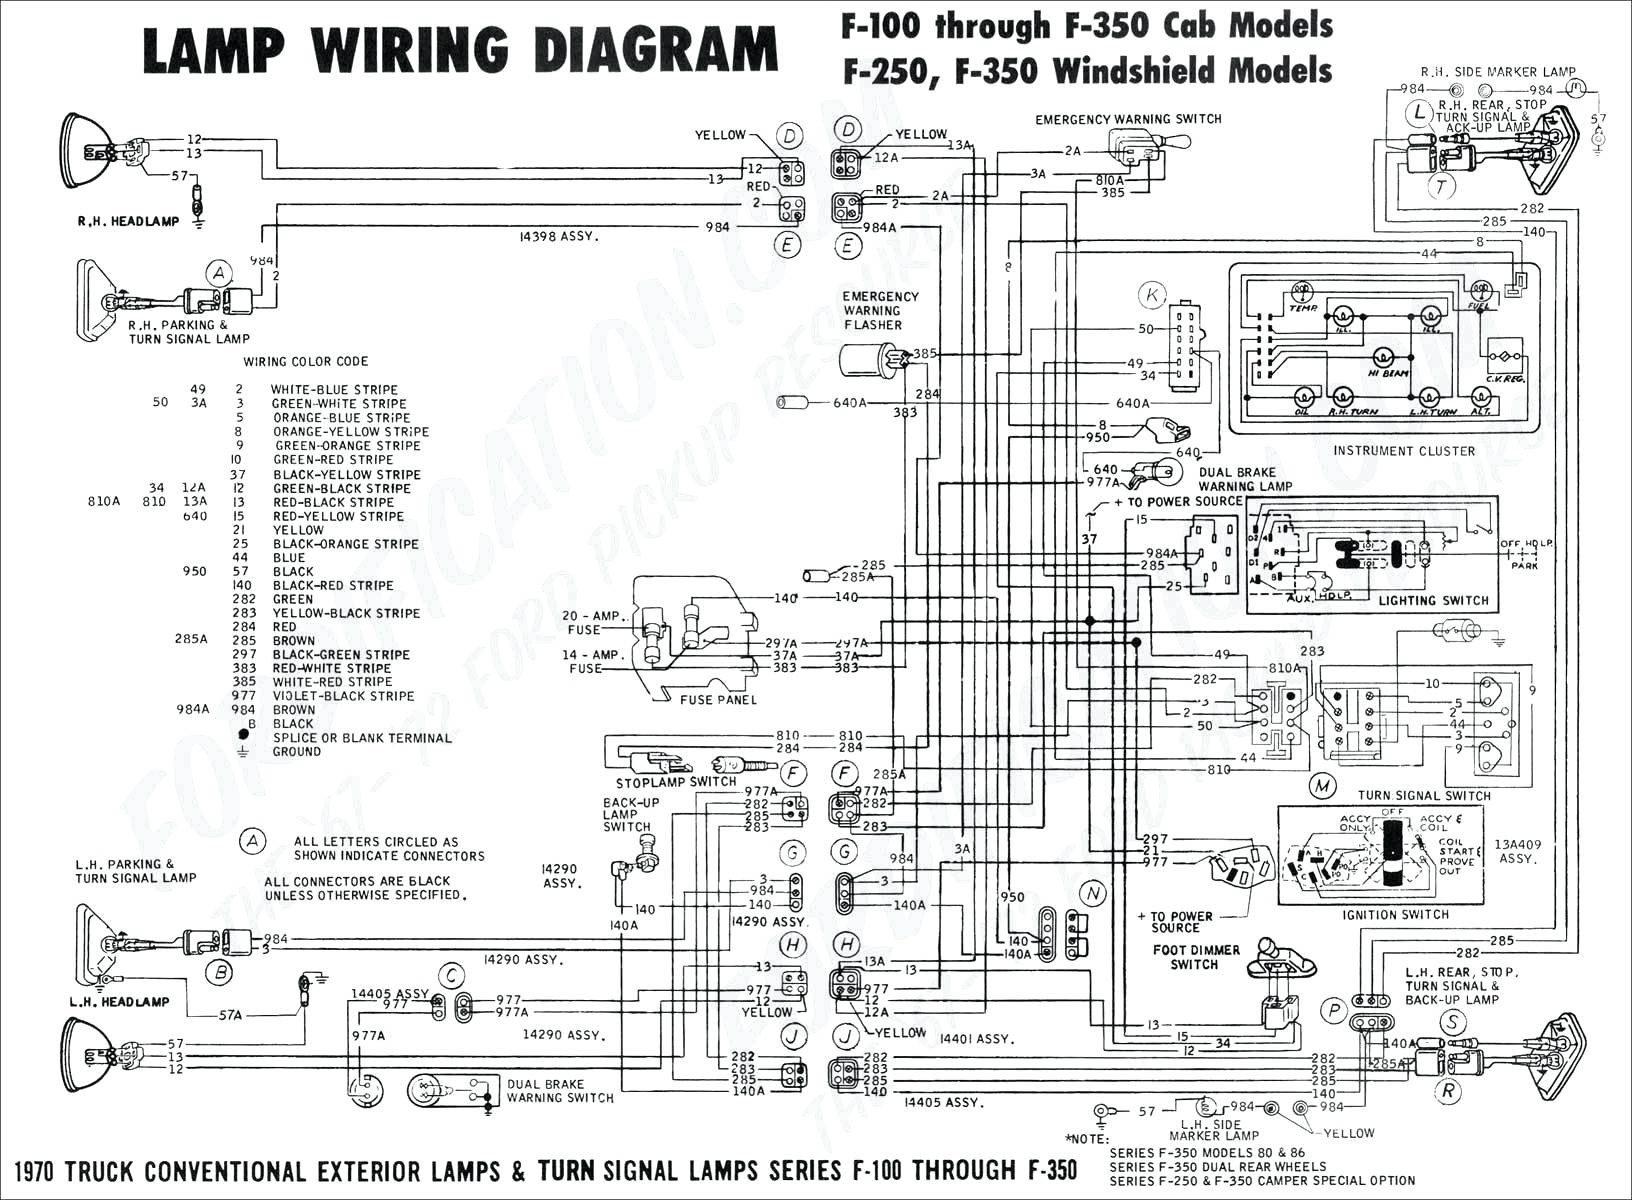 2000 ford mustang stereo wiring diagram autos weblog wire center rh magnusrosen net